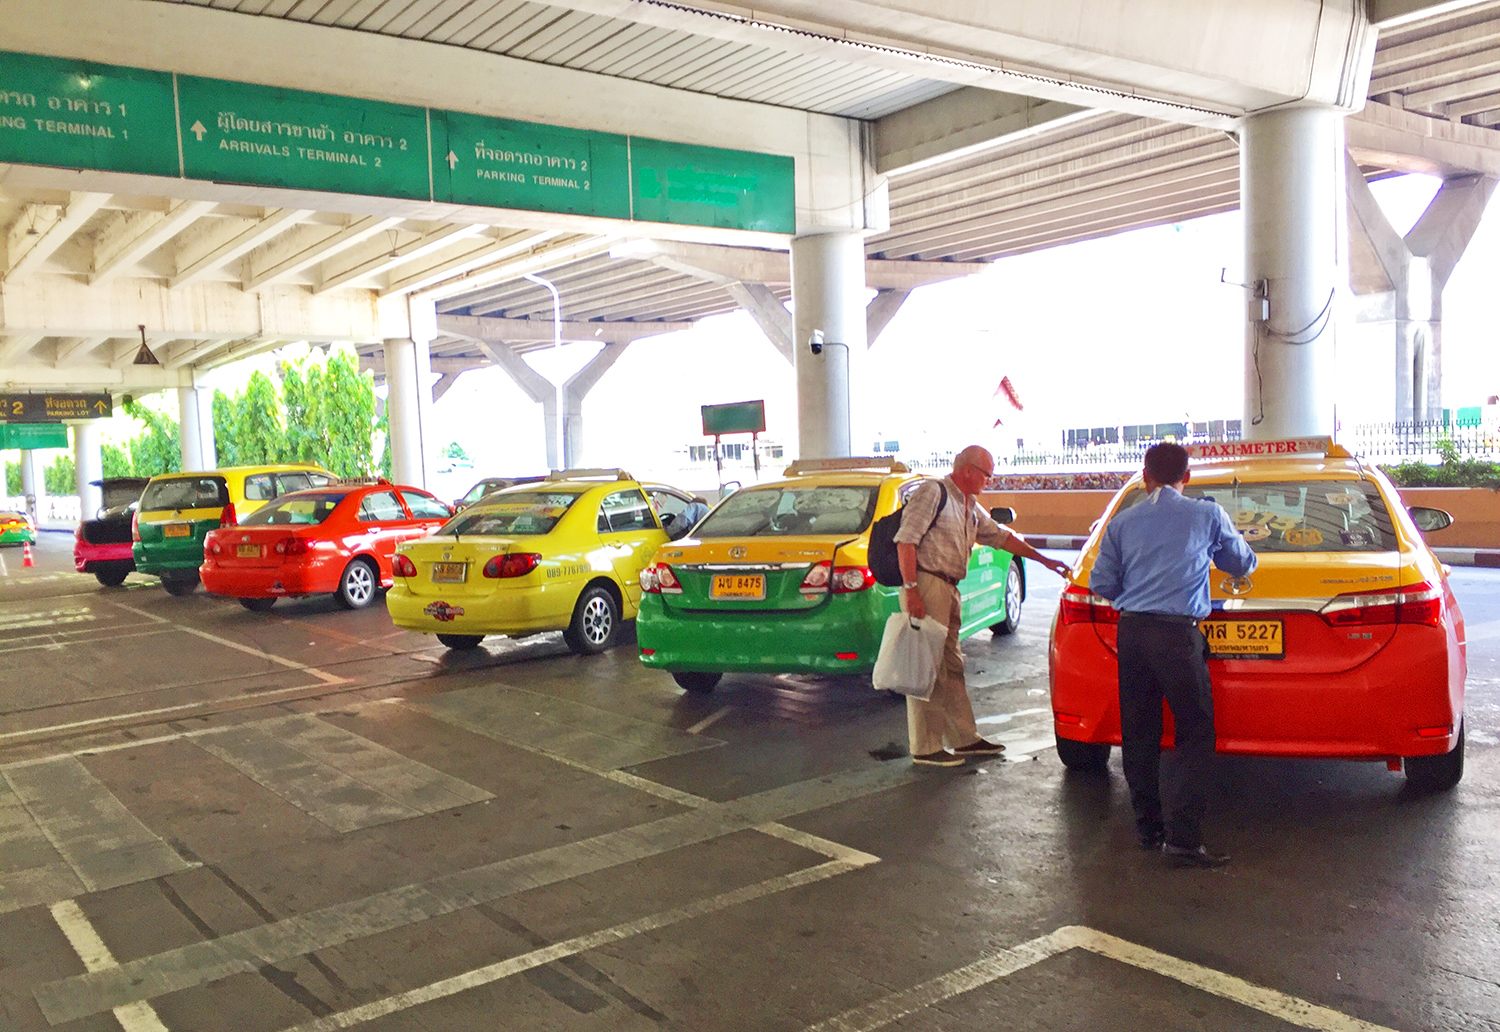 Такси паттайя бангкок аэропорт. Такси Бангкок Паттайя. Общественное такси Бангкок аэропорт. Такси из Бангкока до Паттайи. Такси Бангкок Паттайя Тойота.